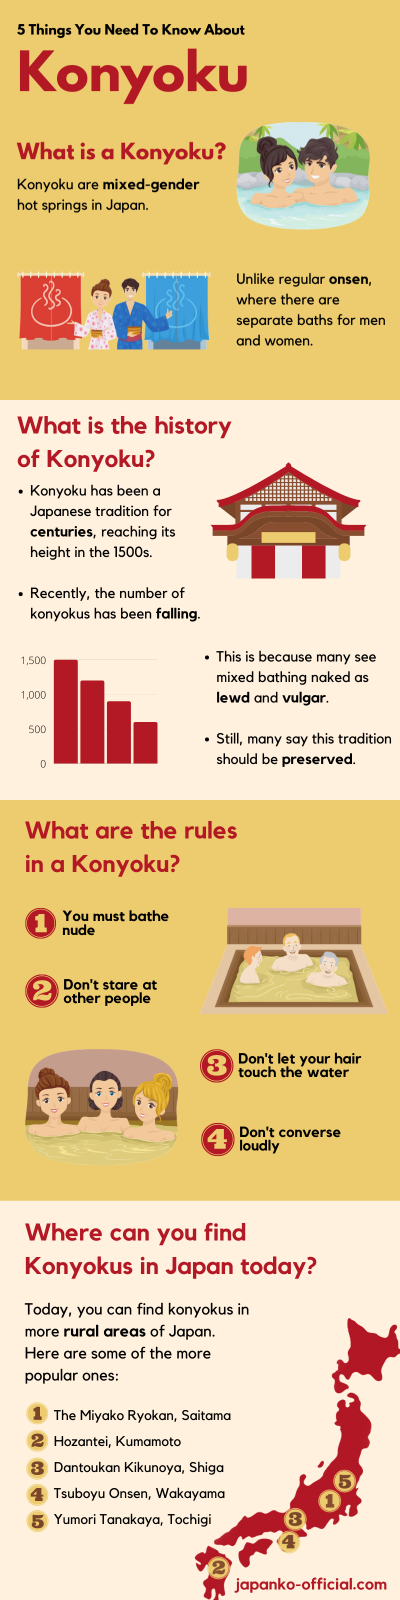 Konyoku infographics showng the history, rules, and locations of some konyoku today.